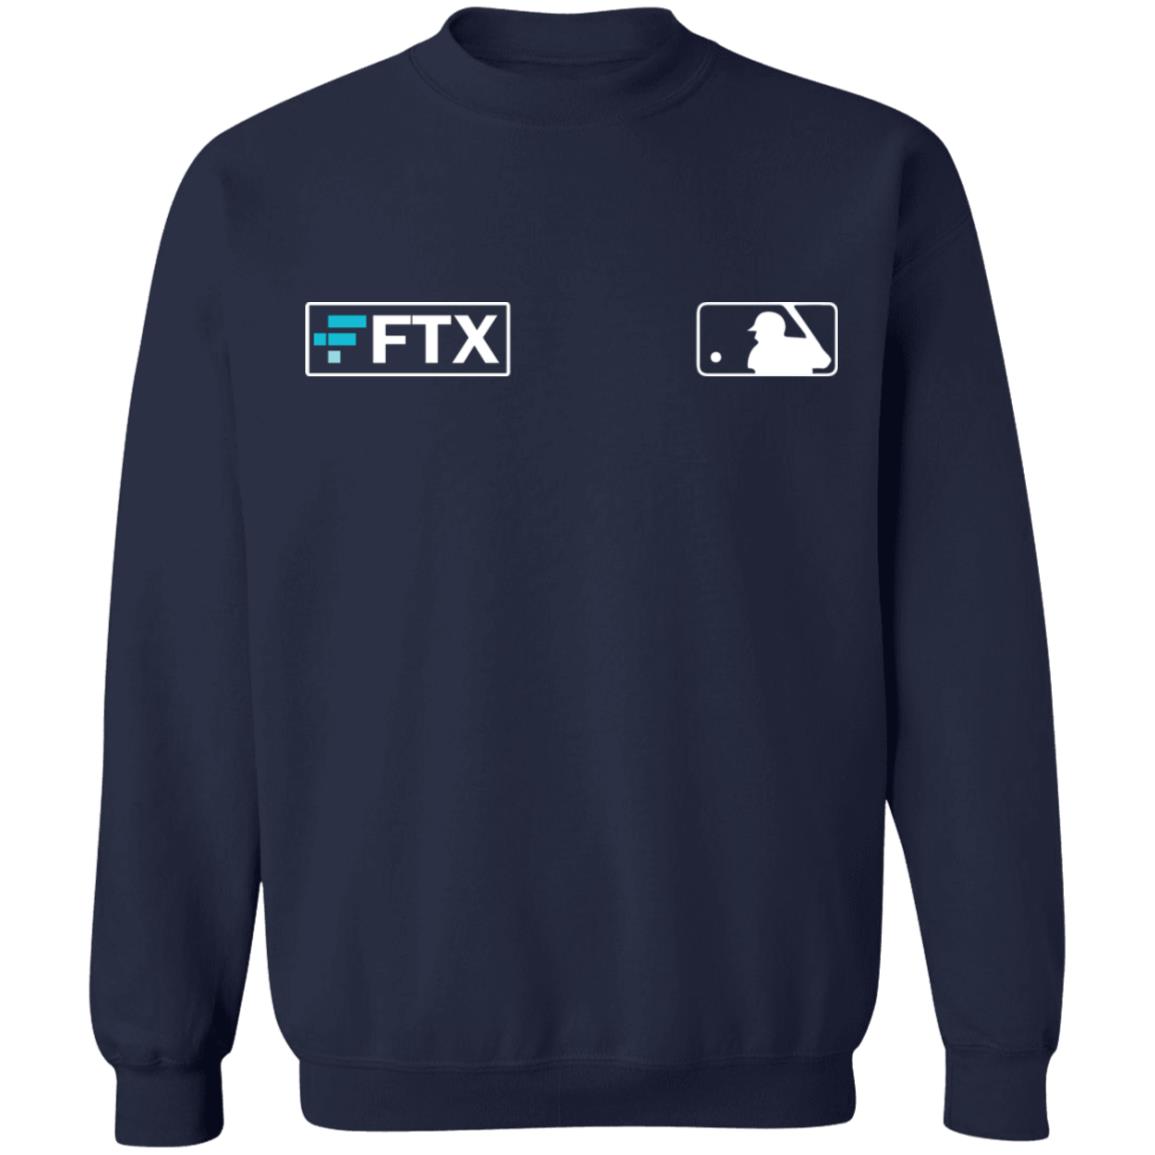 Ftx On Umpire Shirt - Lelemoon